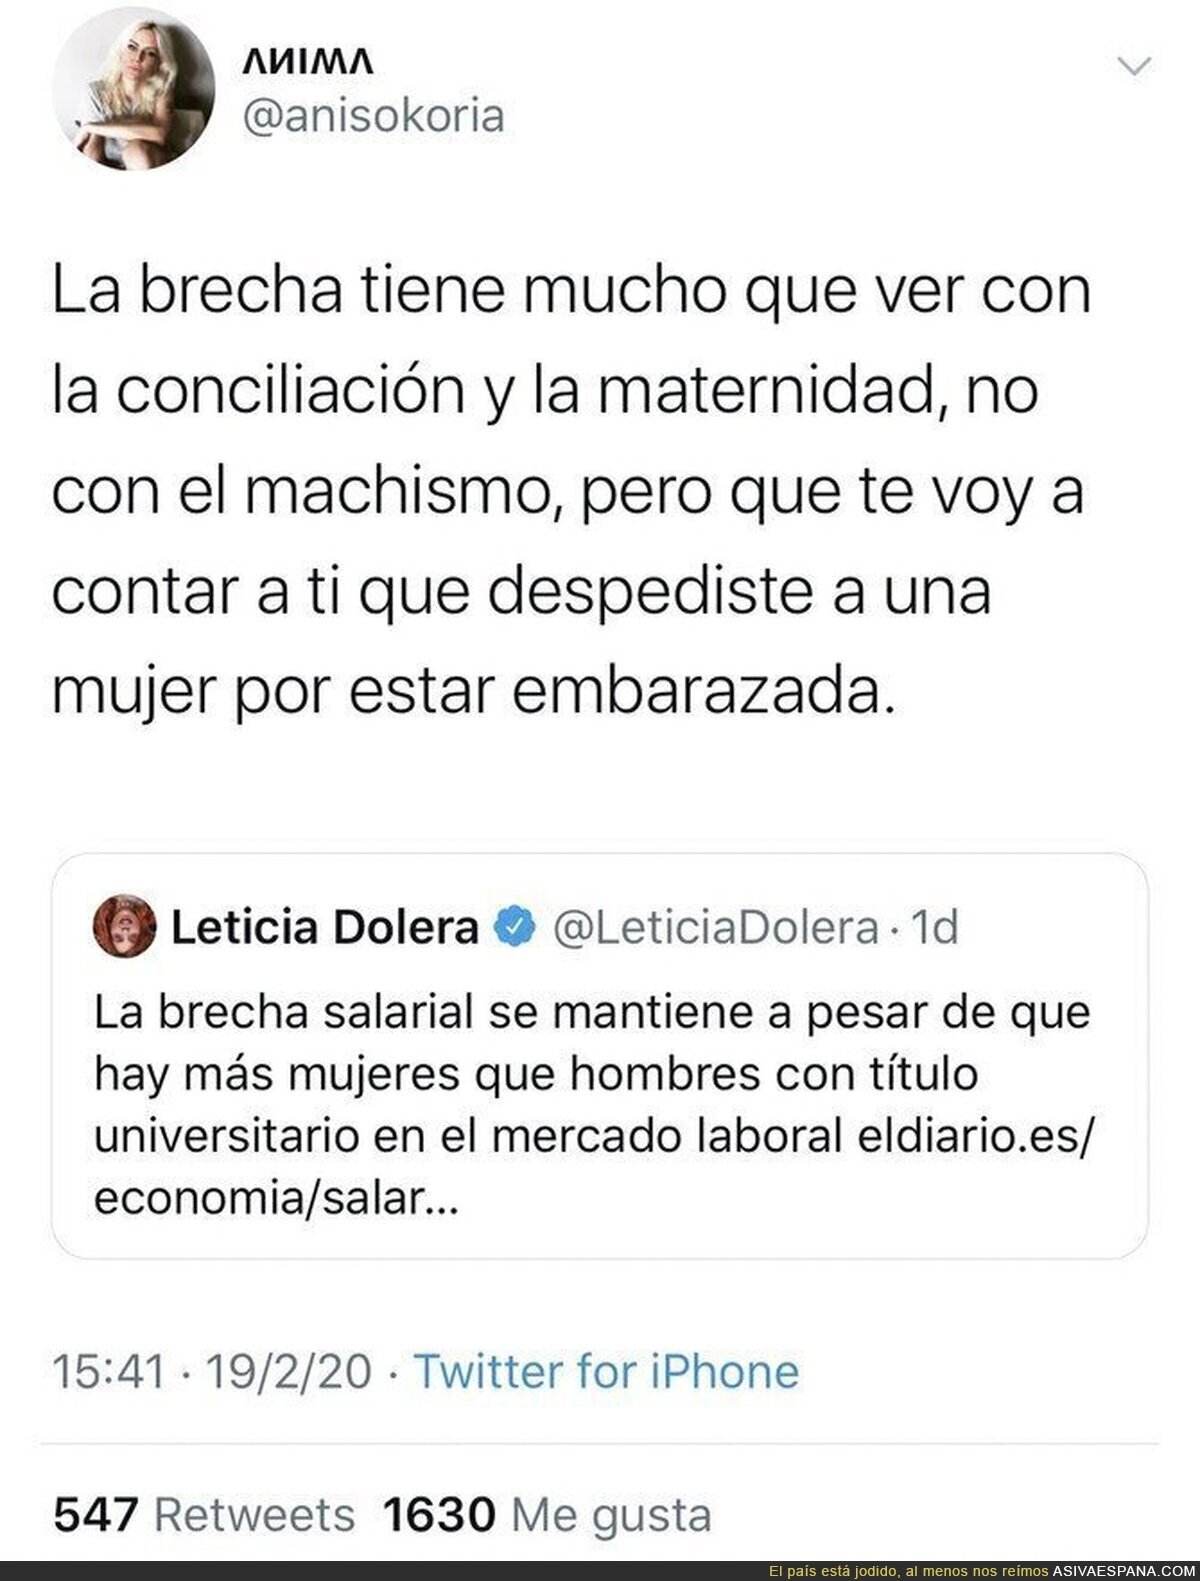 Repartiendo verdades a Leticia Dolera